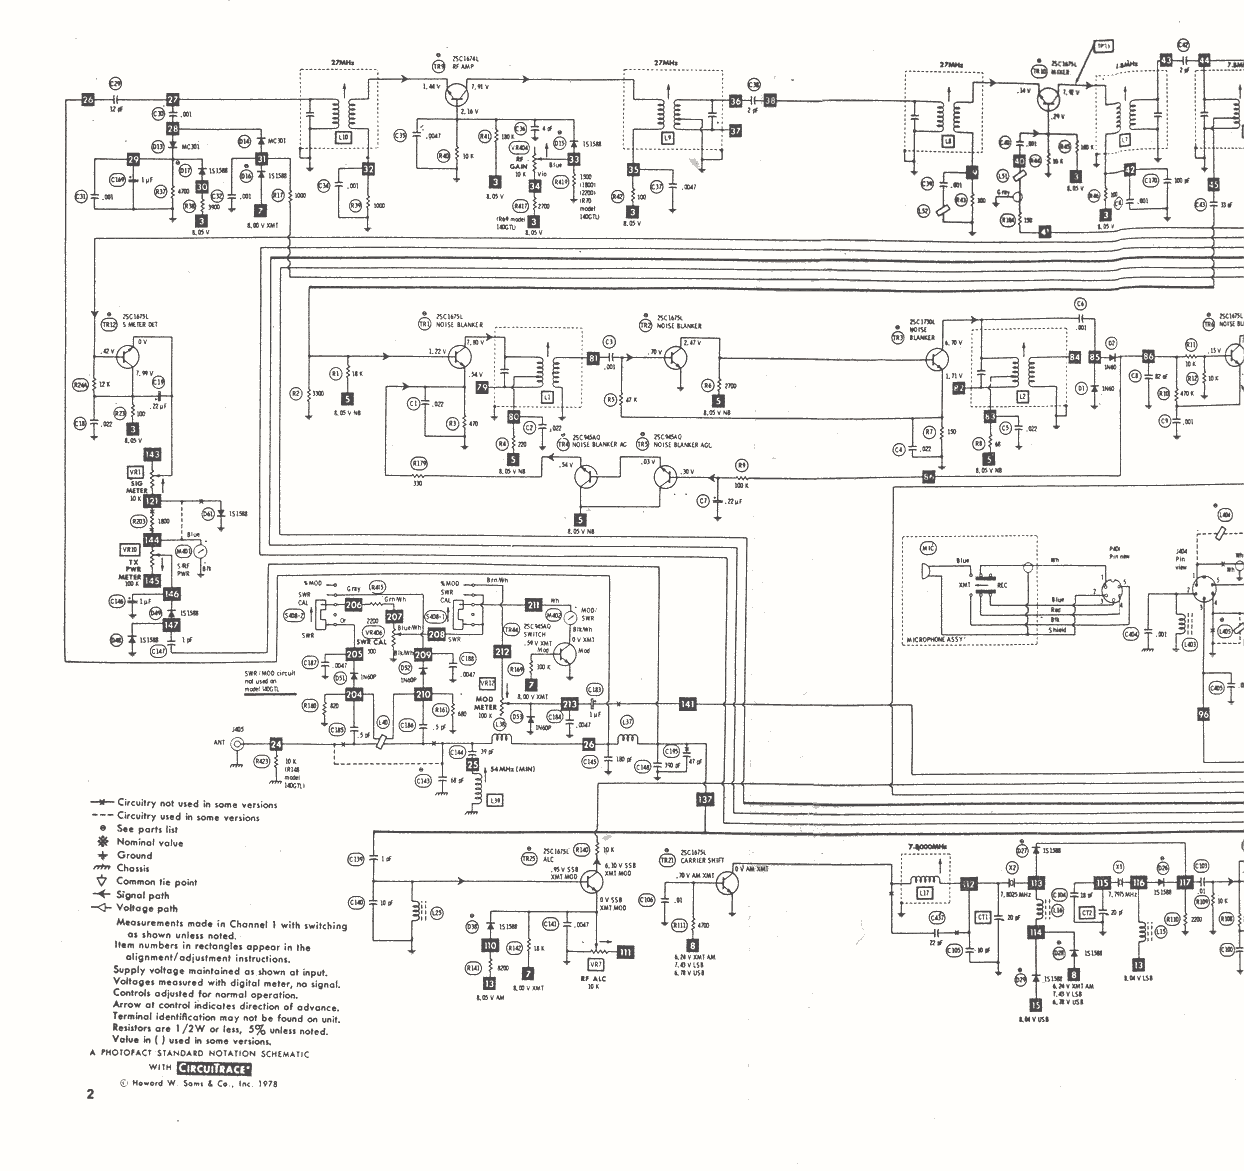   Schematic diagram for Cobra 140GTL.

Part 1 of 4